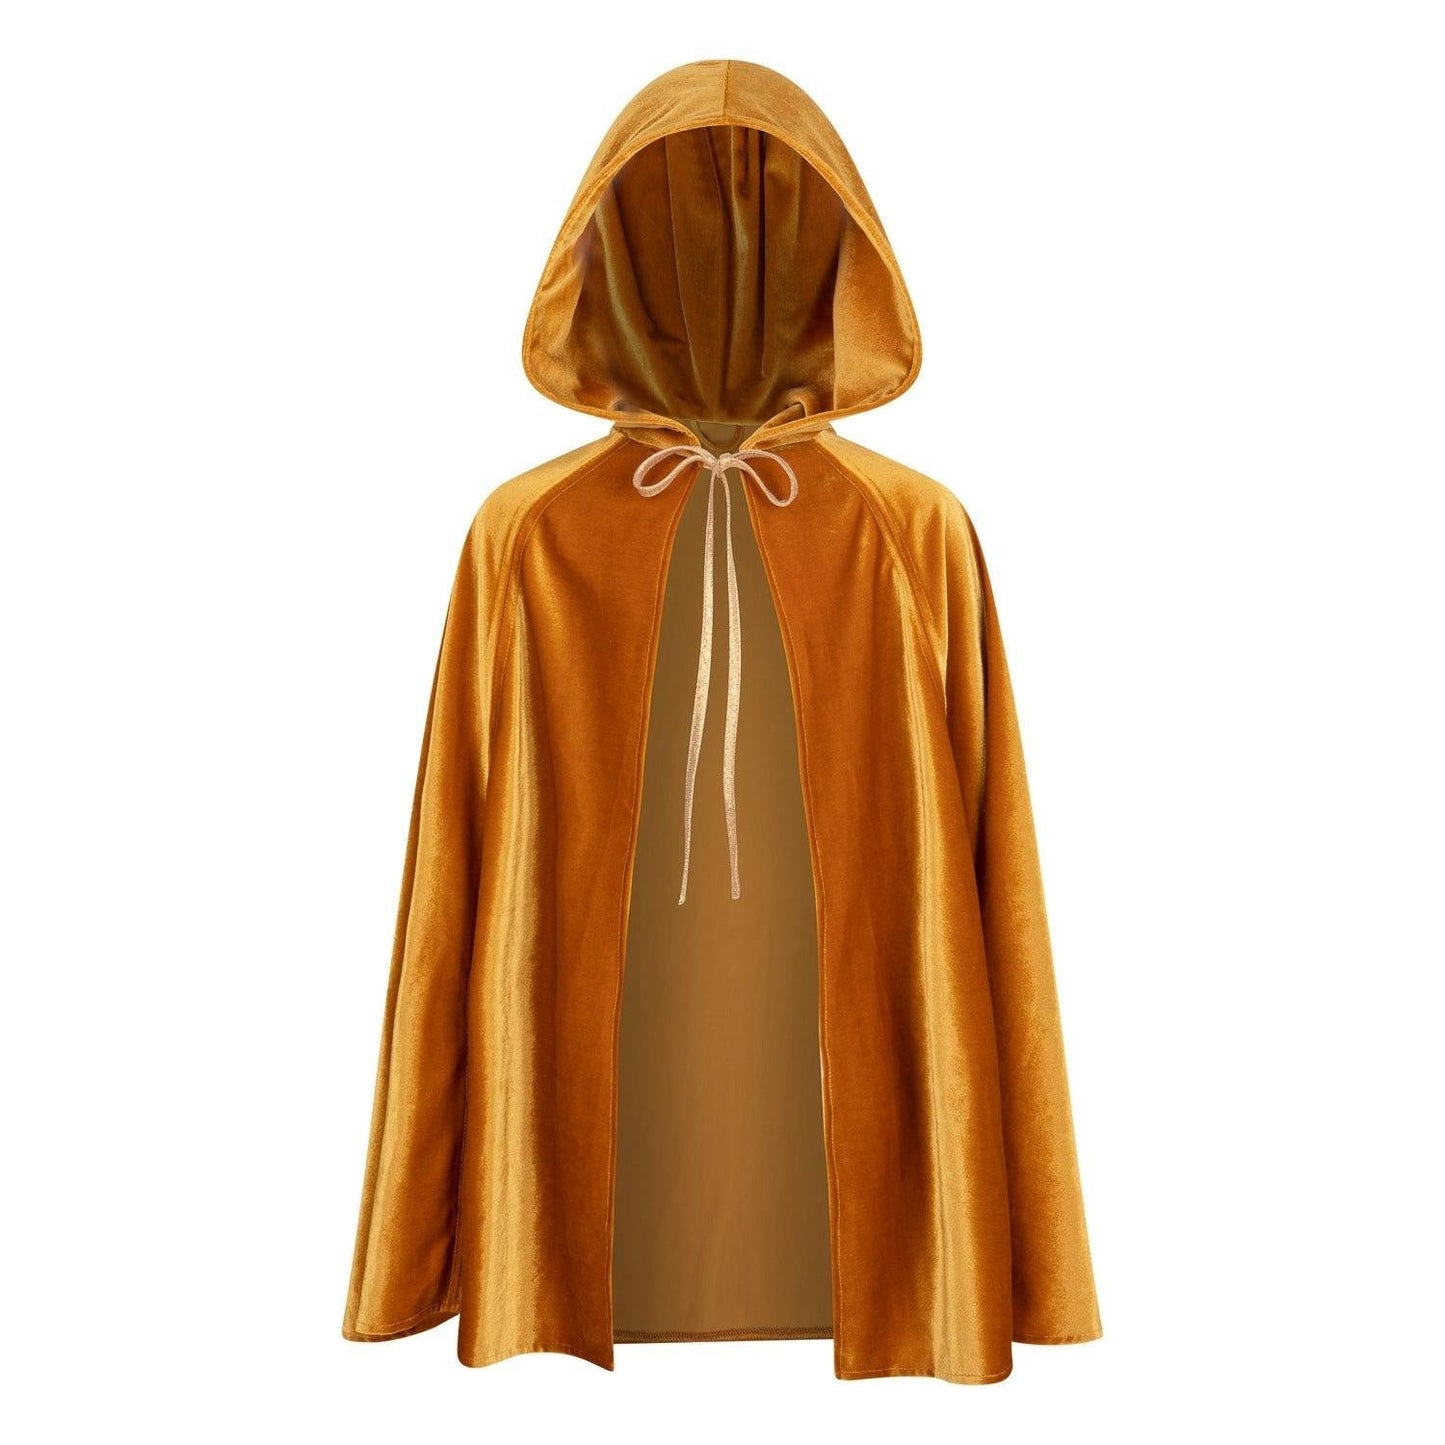 “Little Gold Riding Hood” Magic Cape